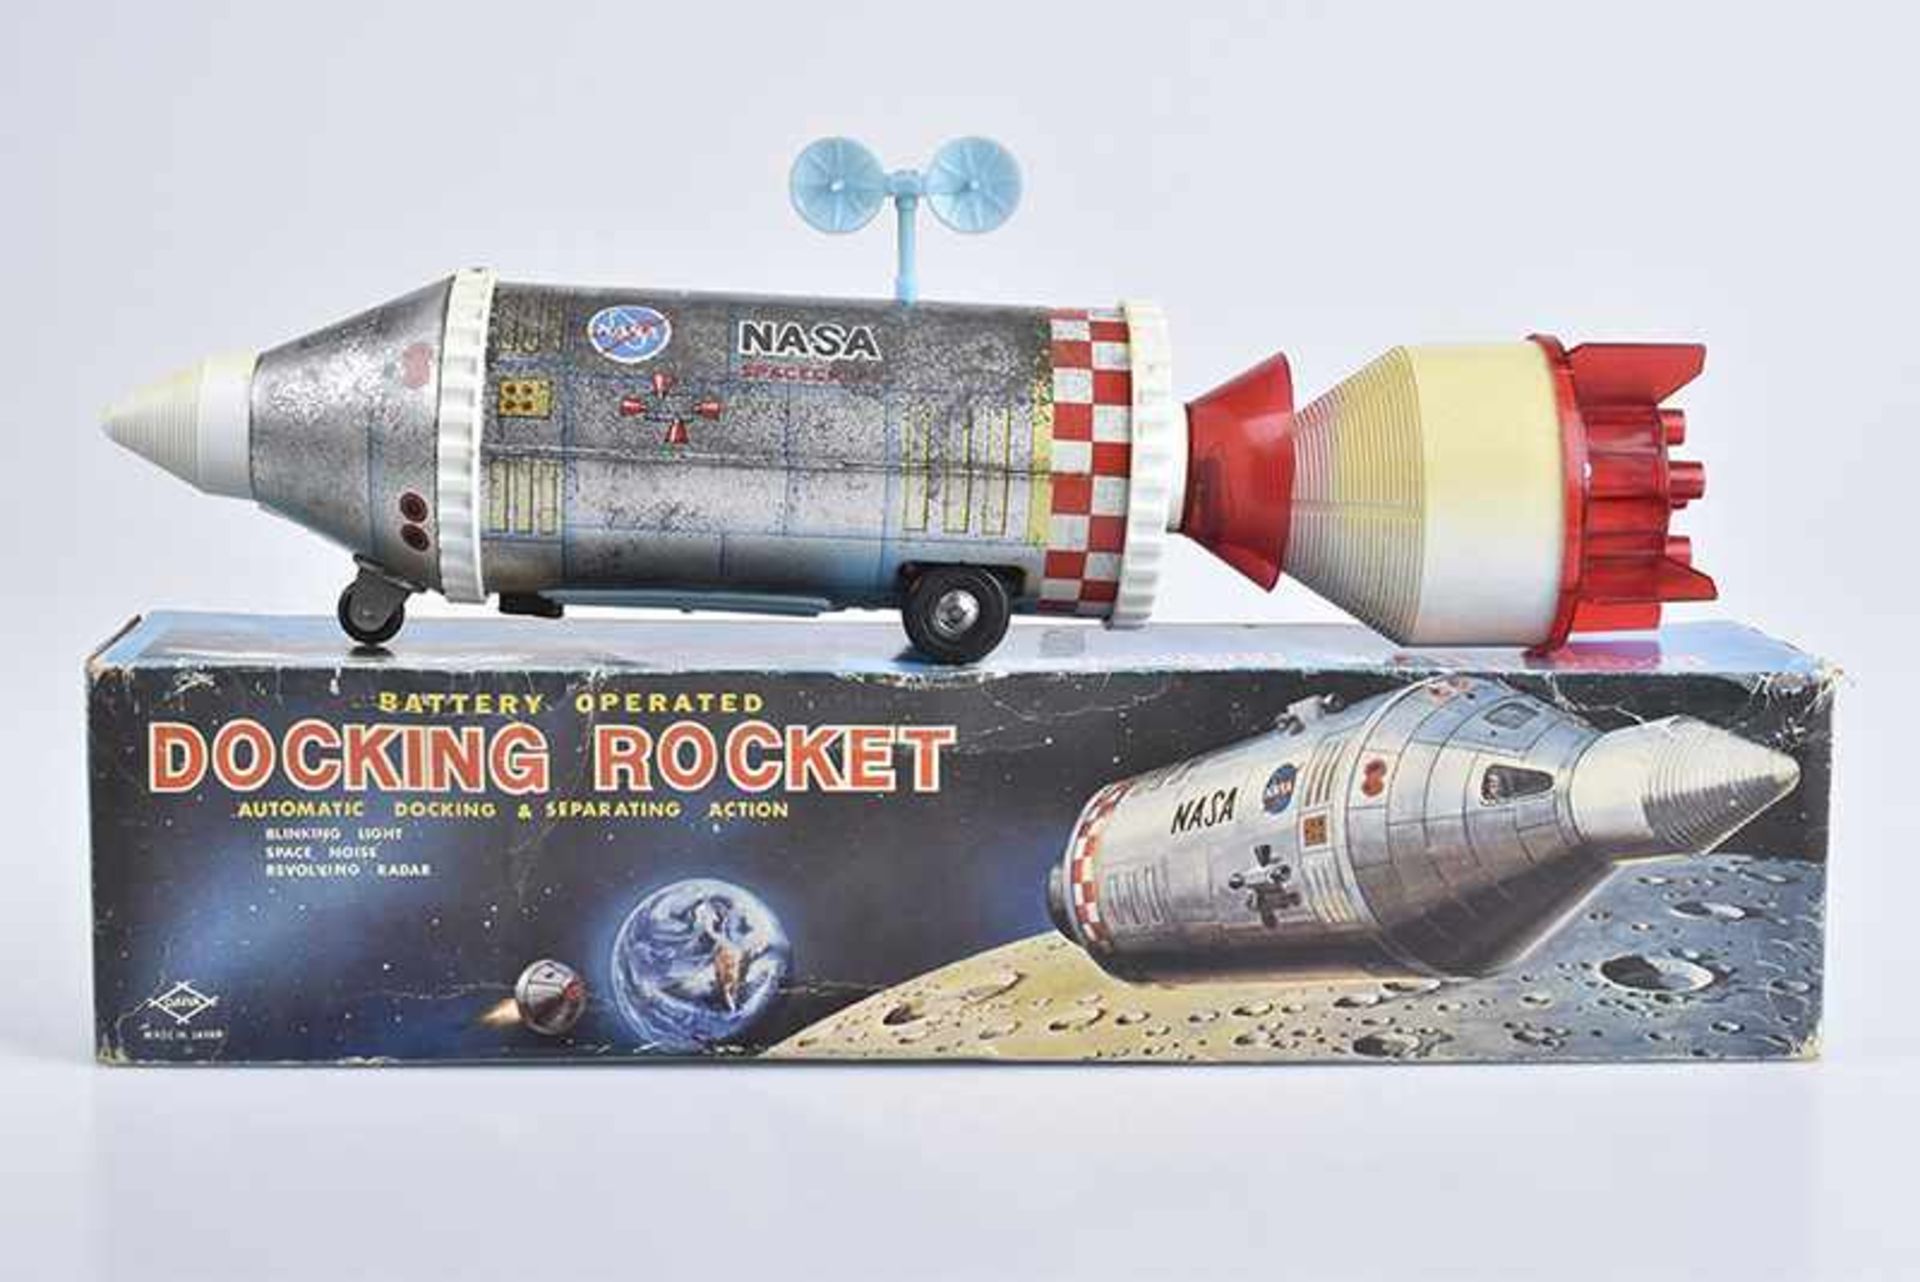 DAIYA Docking Rocket, 60er Jahre, Made in Japan, Blech/ Kunststoff, grau und rot, L 43 cm, BA, mit